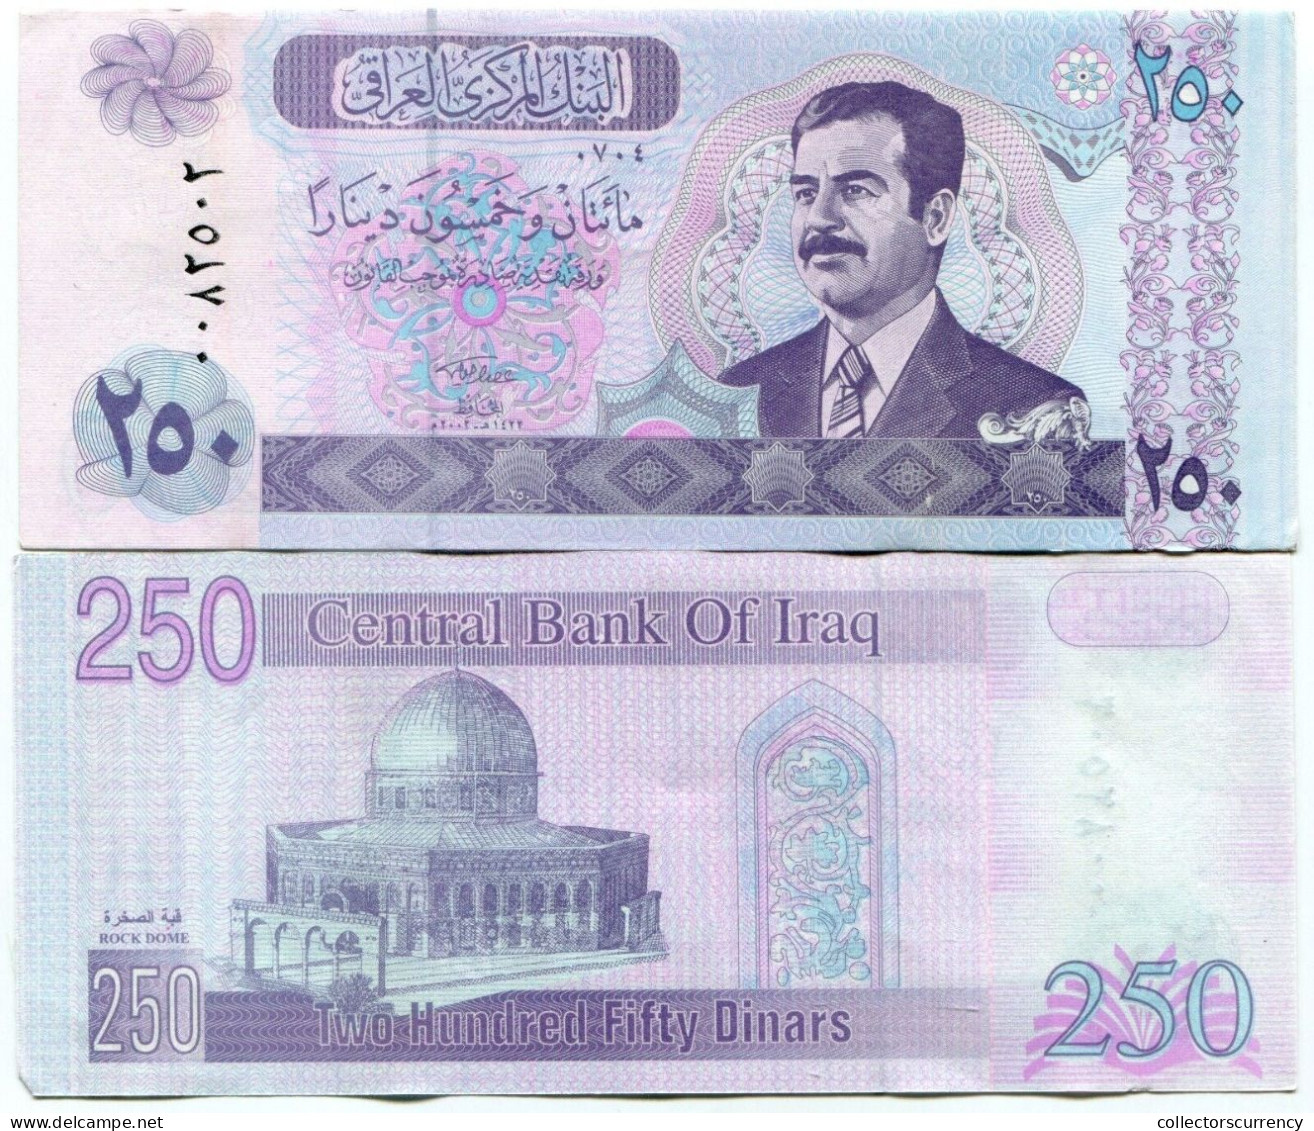 Saddam Hussein Iraq Note 250 Dinar P88 2002 Banknote XF Paper Money - Iraq